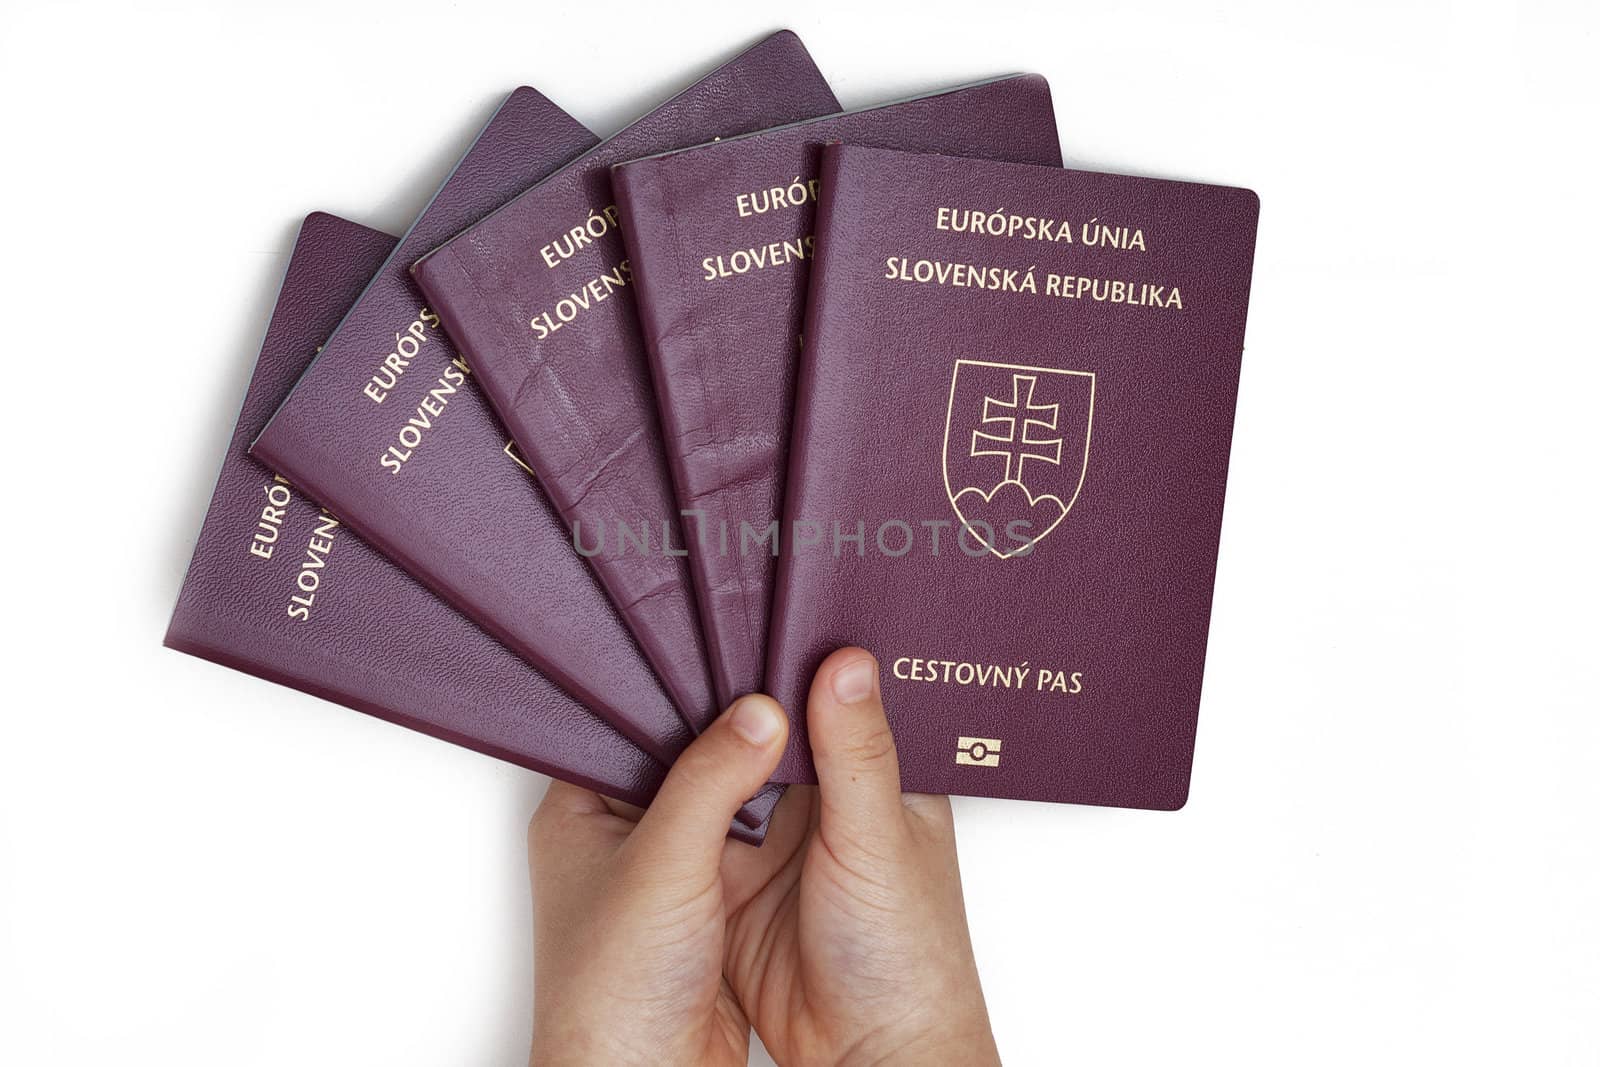 Five Slovak passports in boy's hands by michalpecek